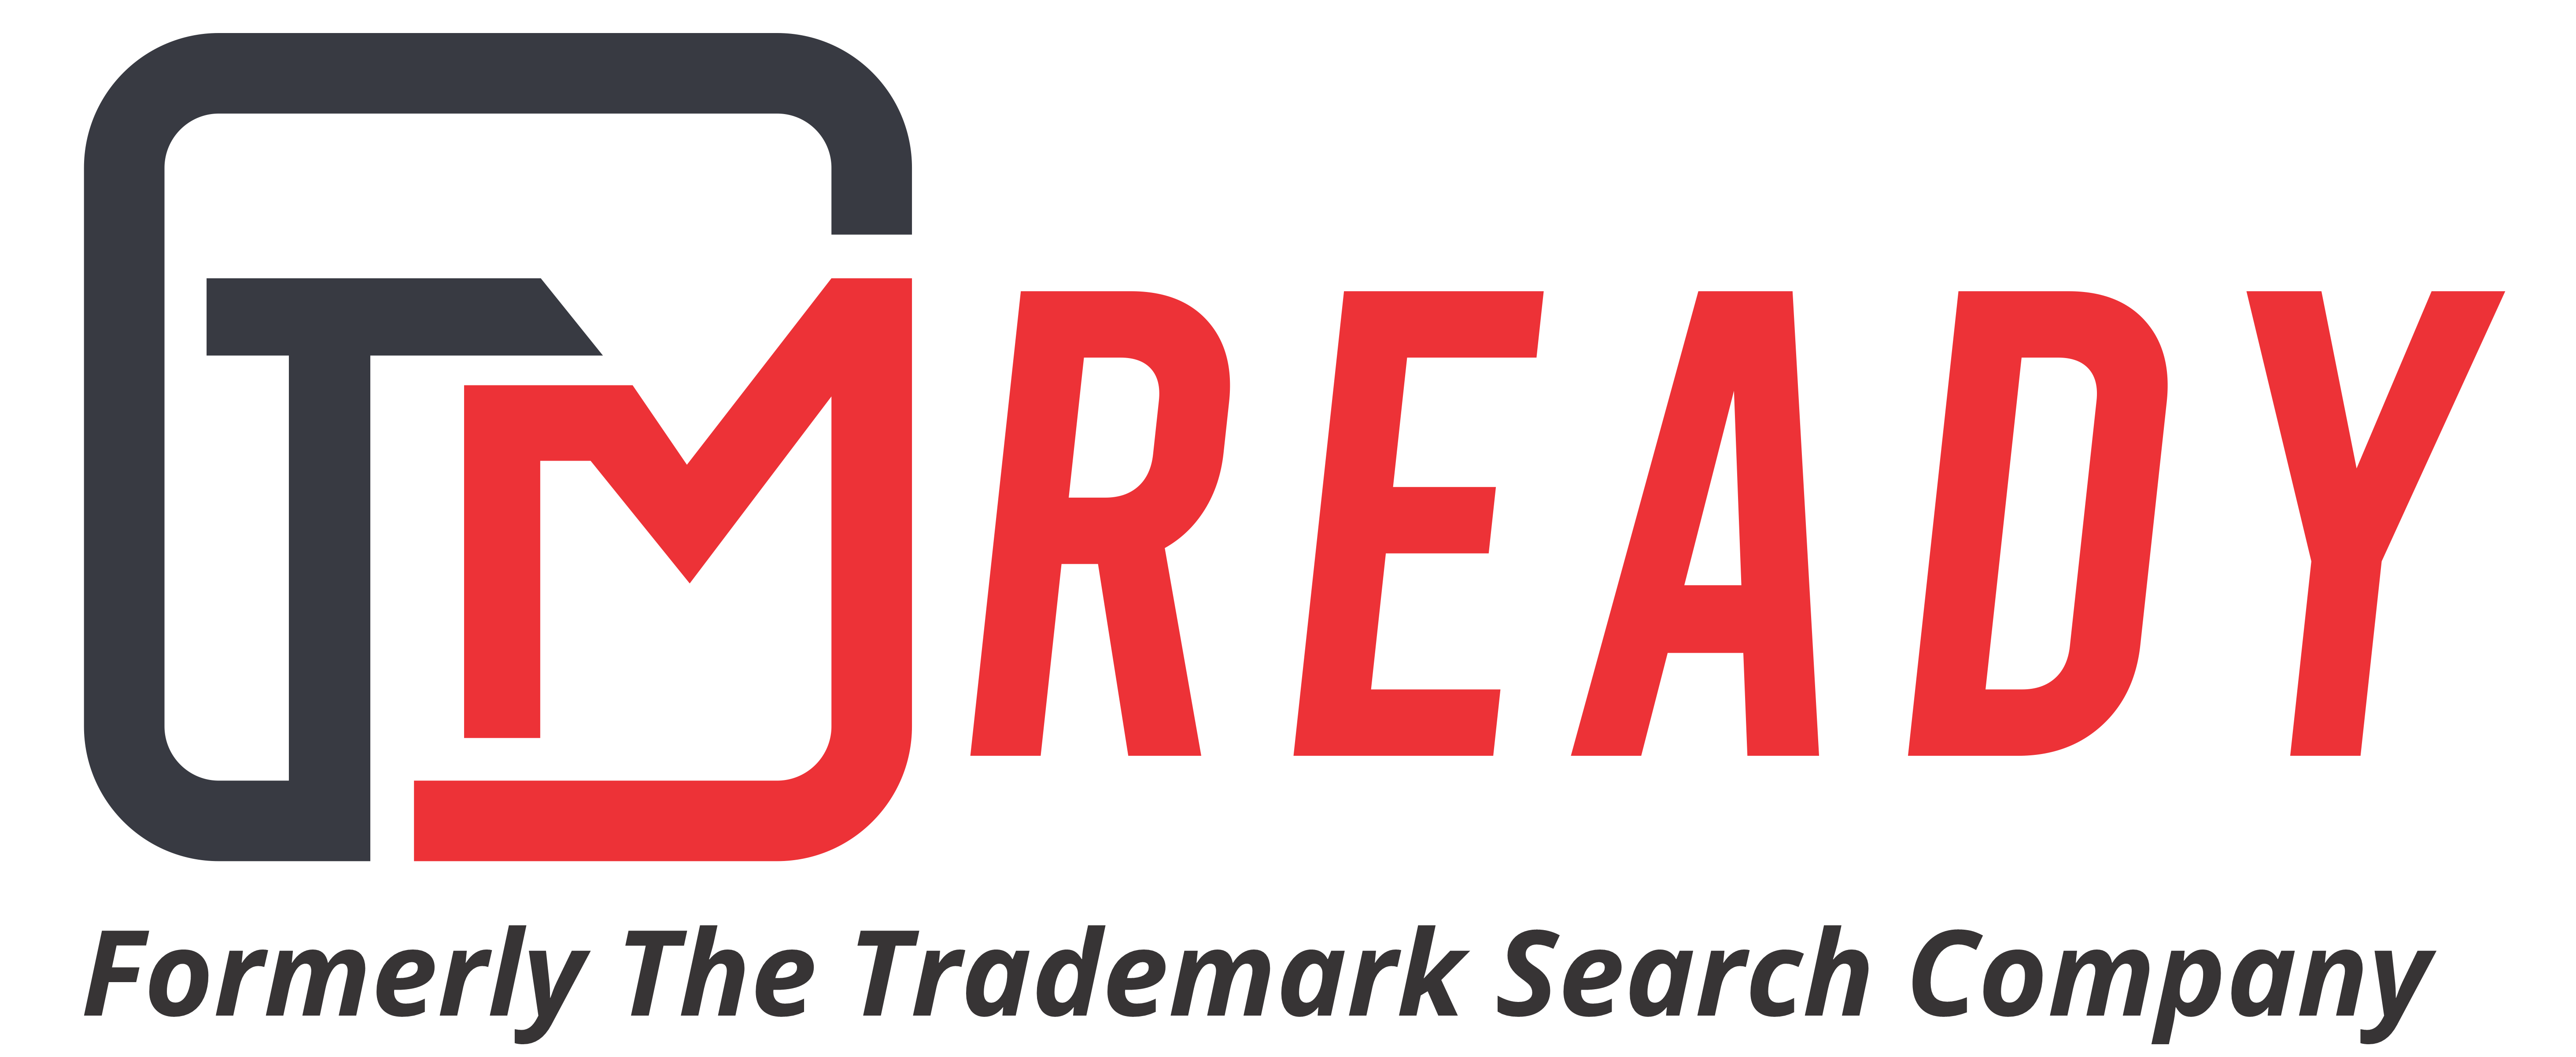 Company Logo For The Trademark Search Company'